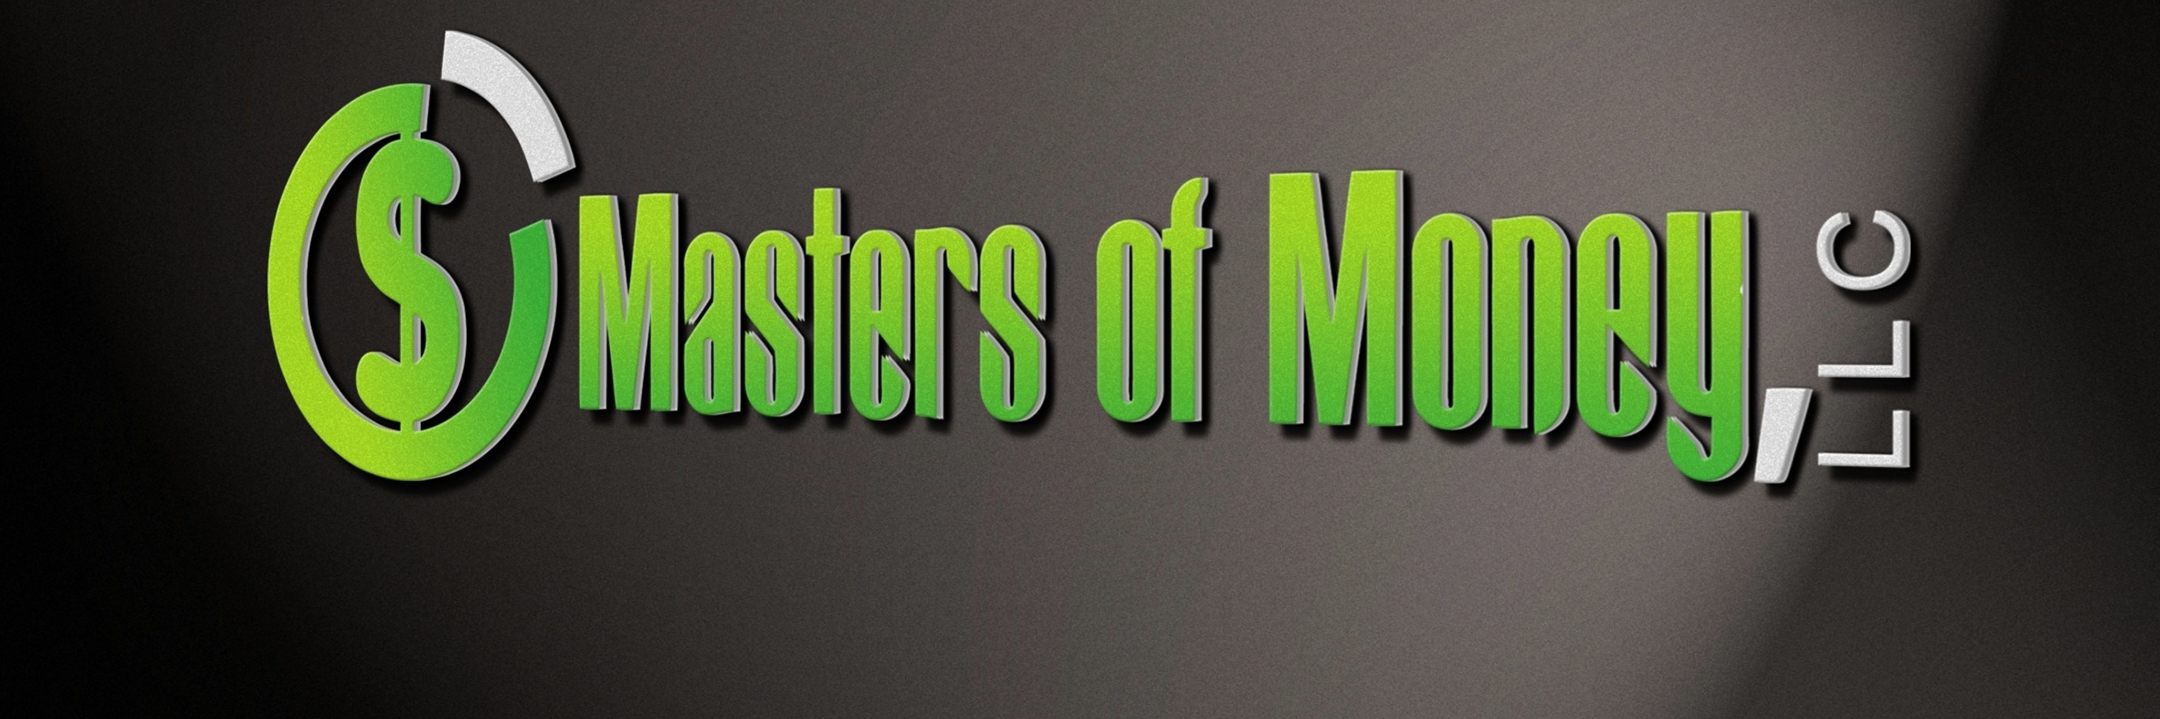 Masters of Money LLC Side Glow Logo Graphic